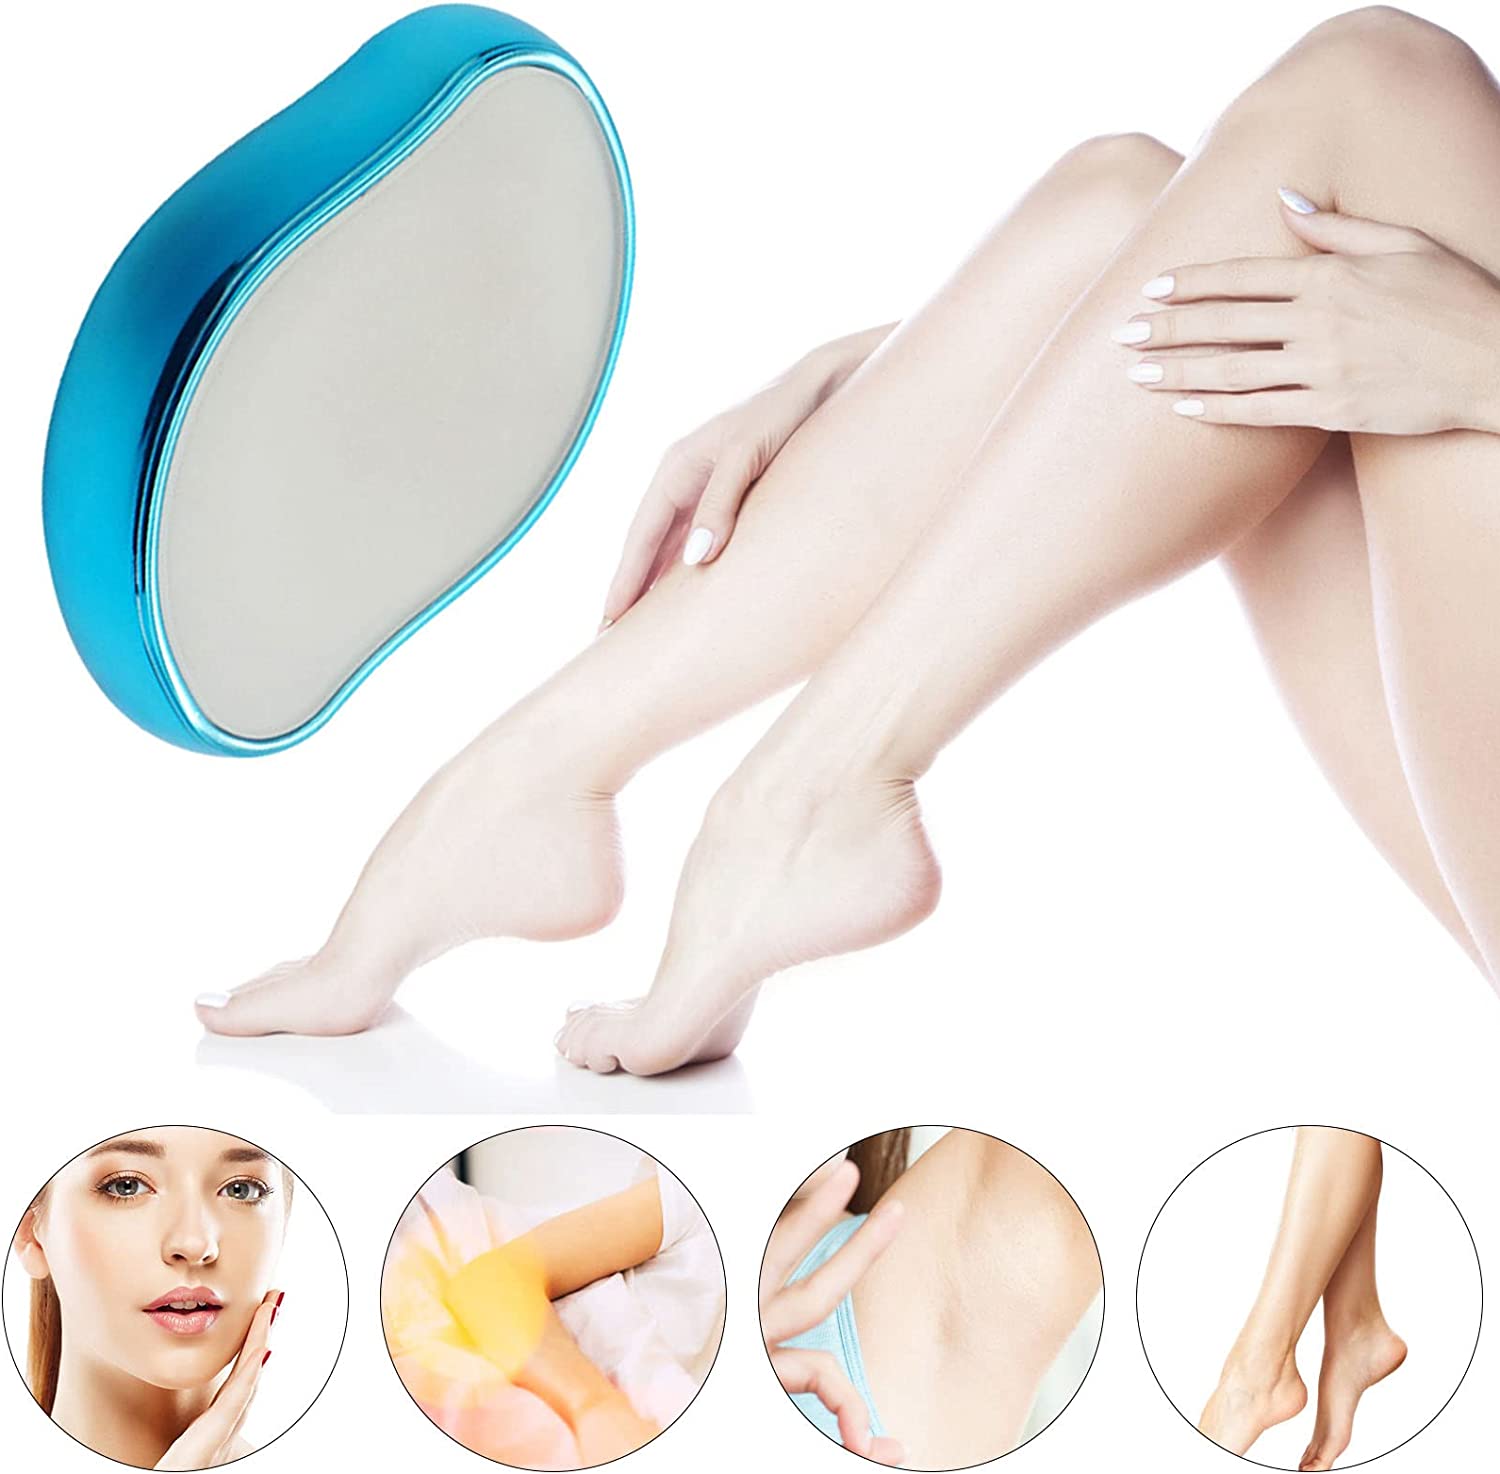 Bleame Crystal Hair Eraser – Painless Exfoliation Hair Removal Tool For Men & Women Arms Leg Back